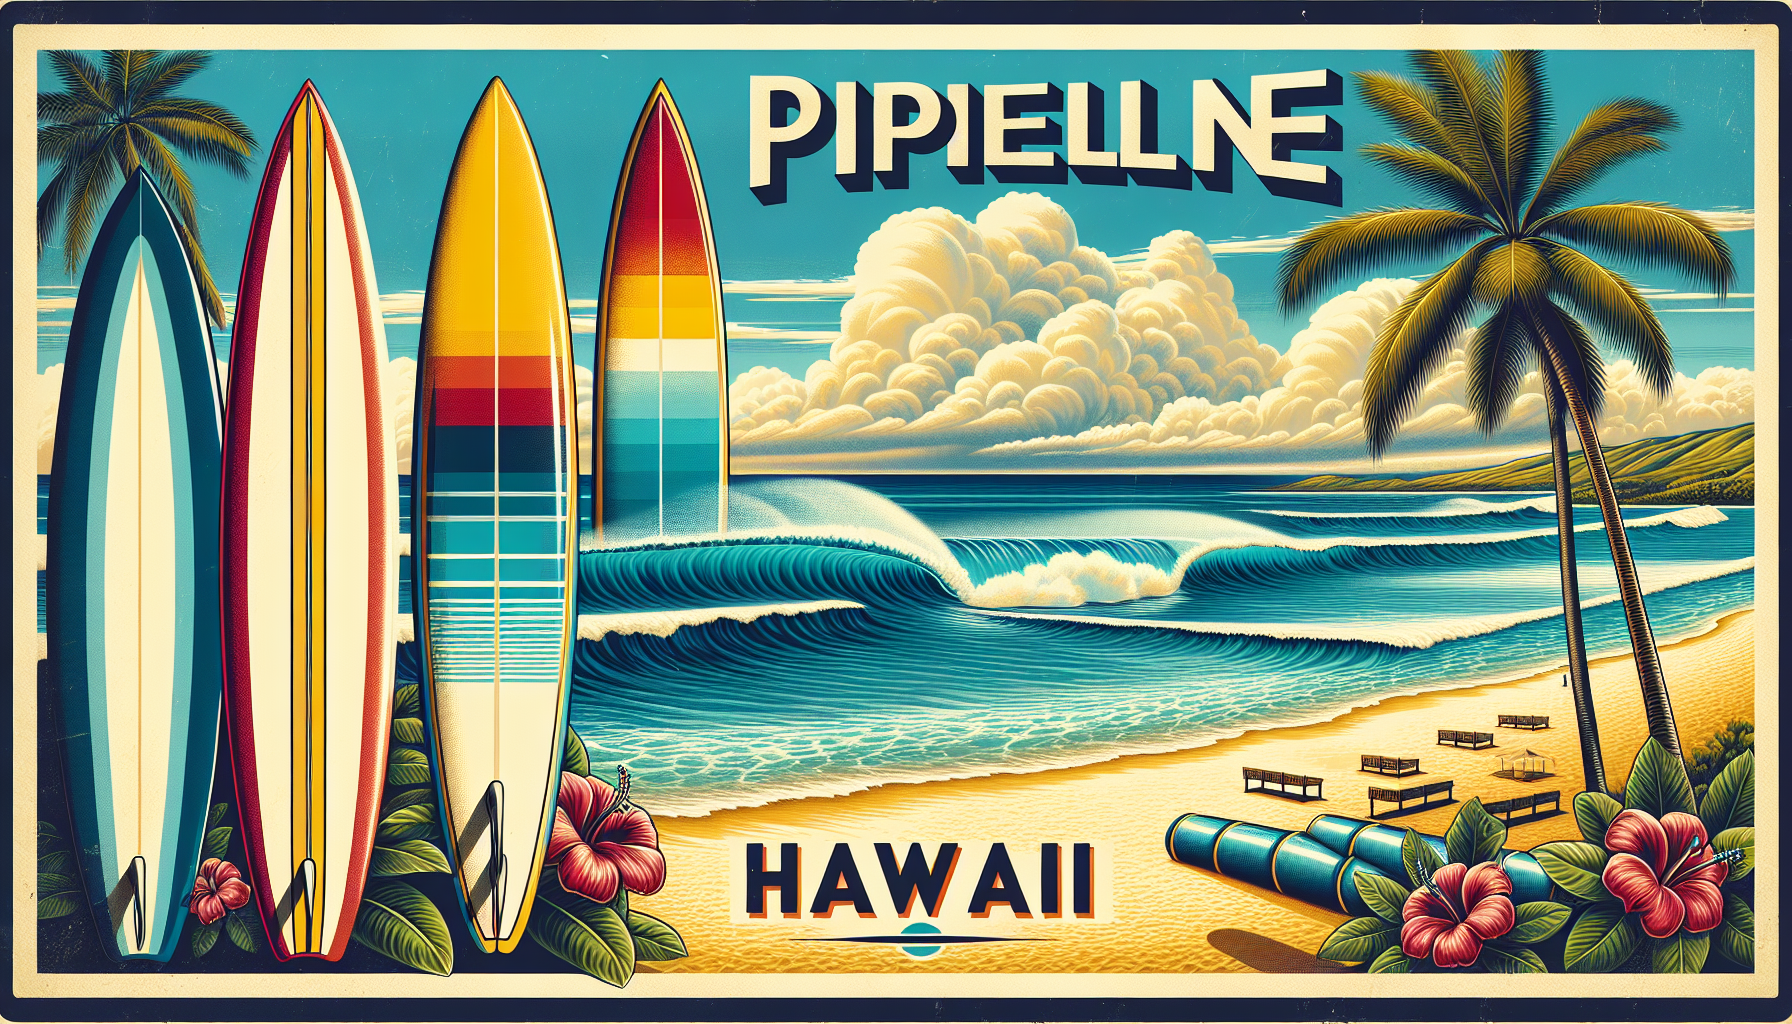 Pipeline Hawaii: O Guia Definitivo para a Mais Famosa Onda de Oahu